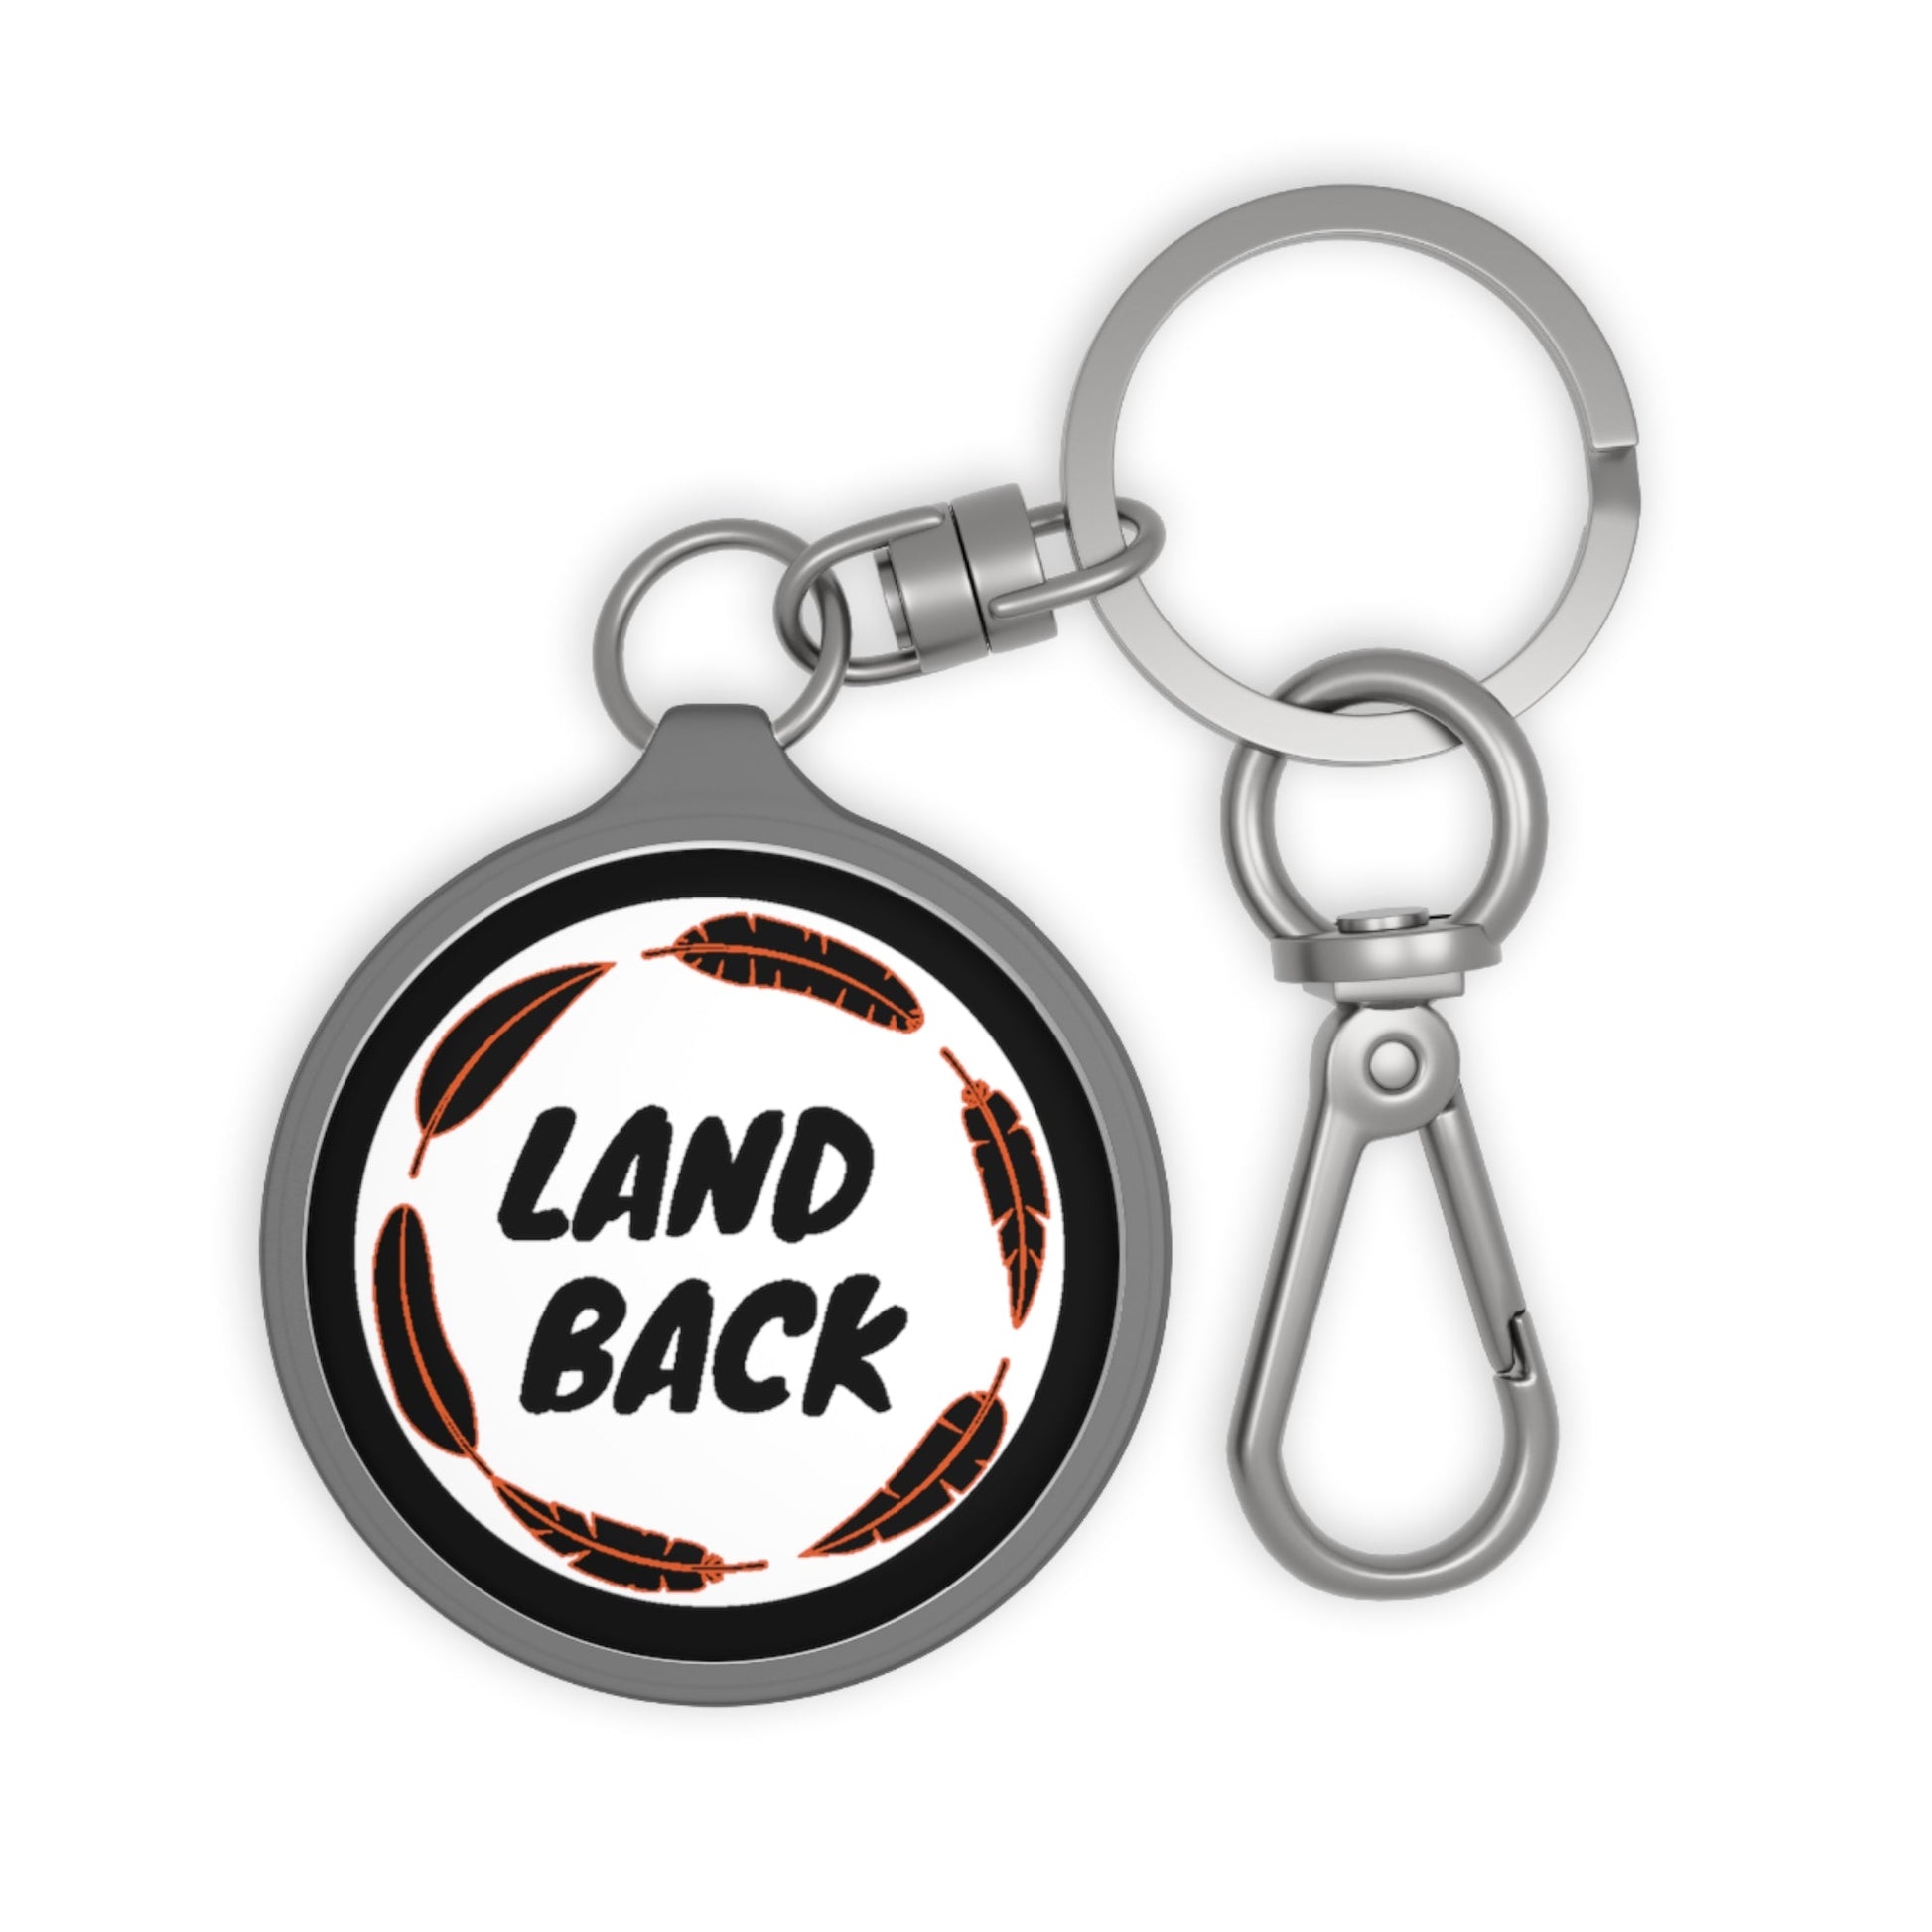 Land back Keyring Tag - Nikikw Designs